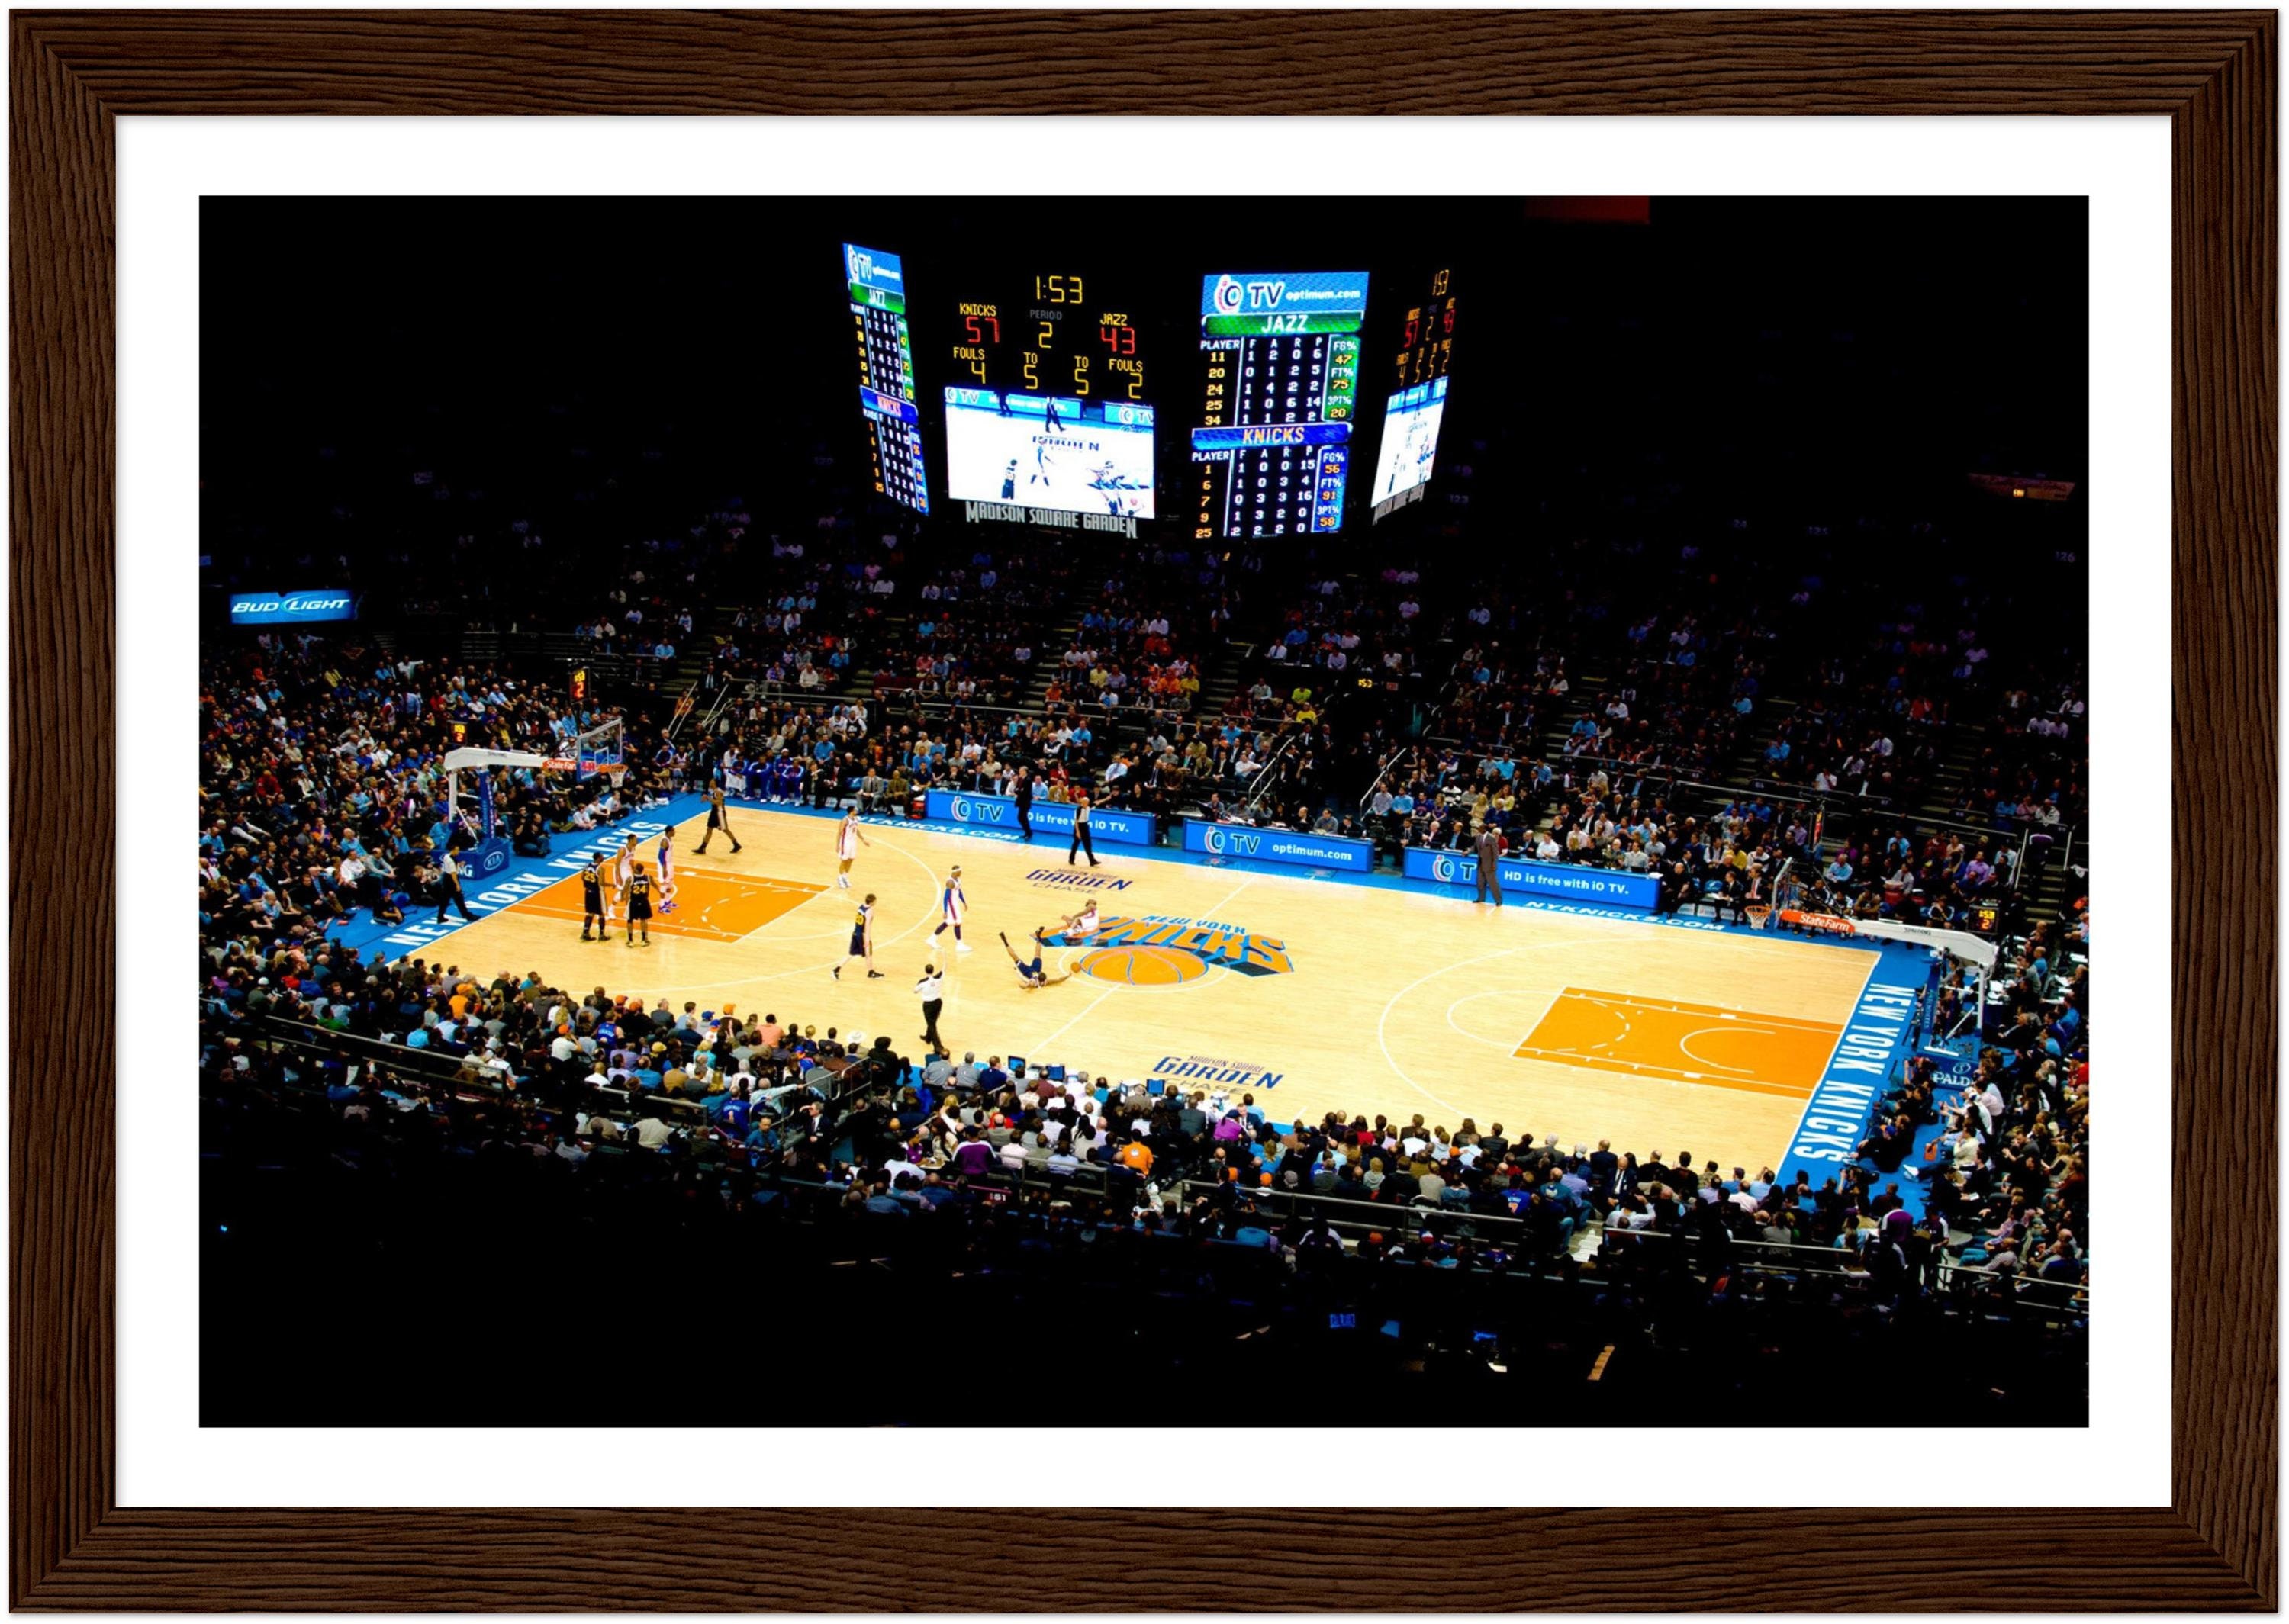 Knicks Infants (12M - 24M)  Shop Madison Square Garden